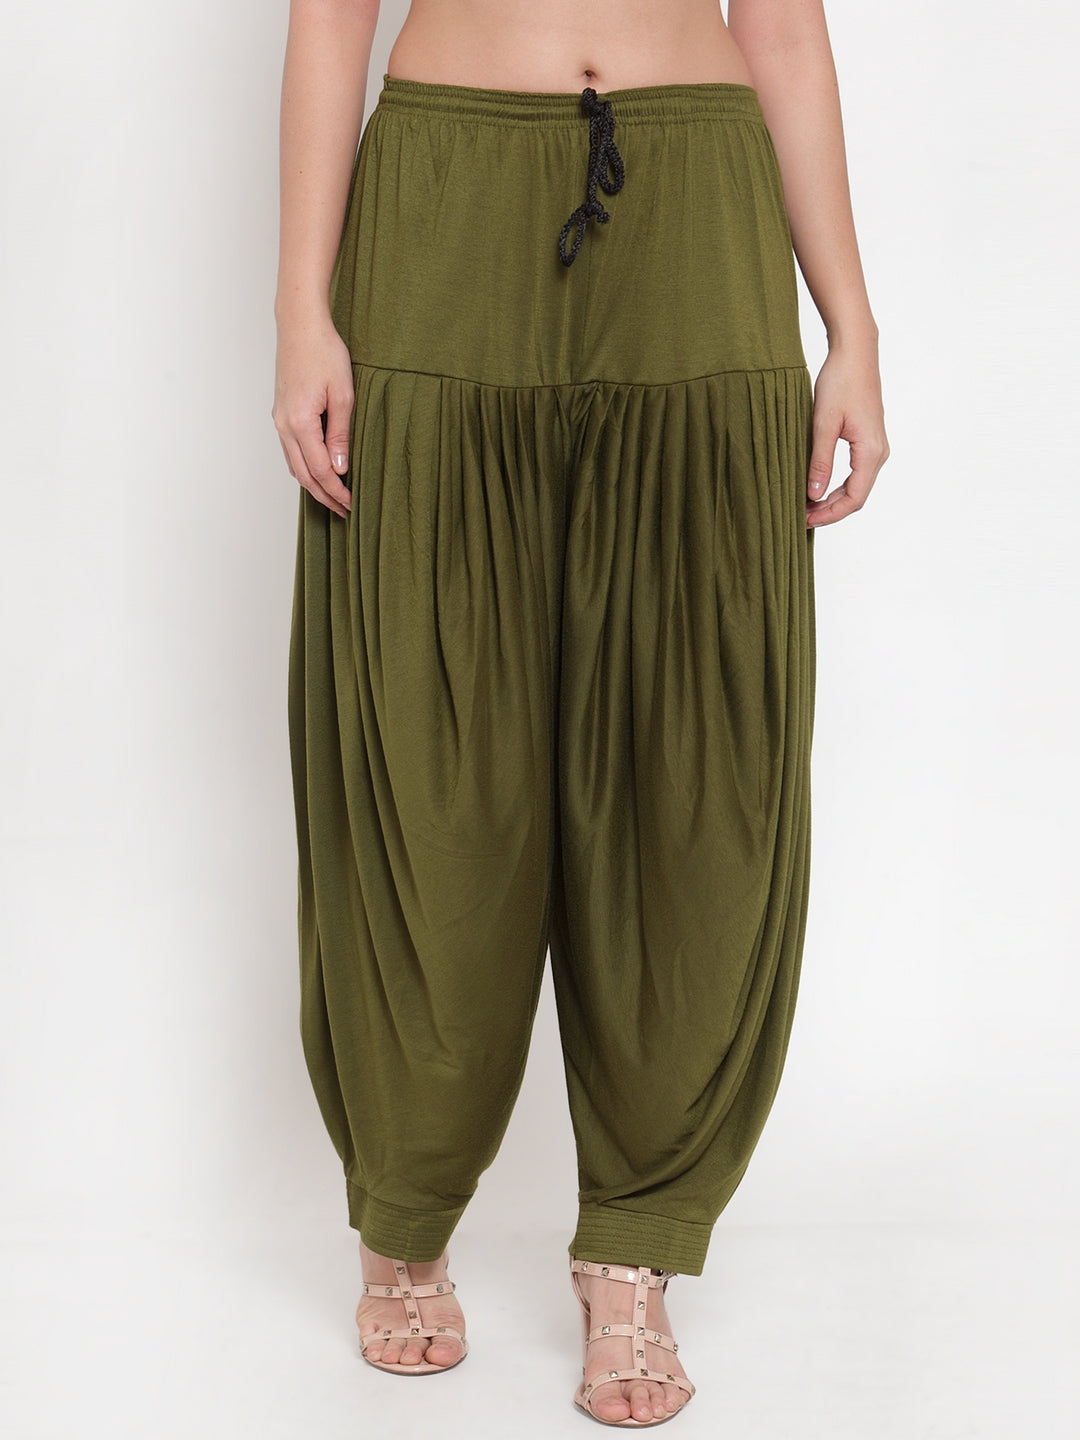 Draped Front Elastic Waist Gray Pants | Wholesale Boho Clothing